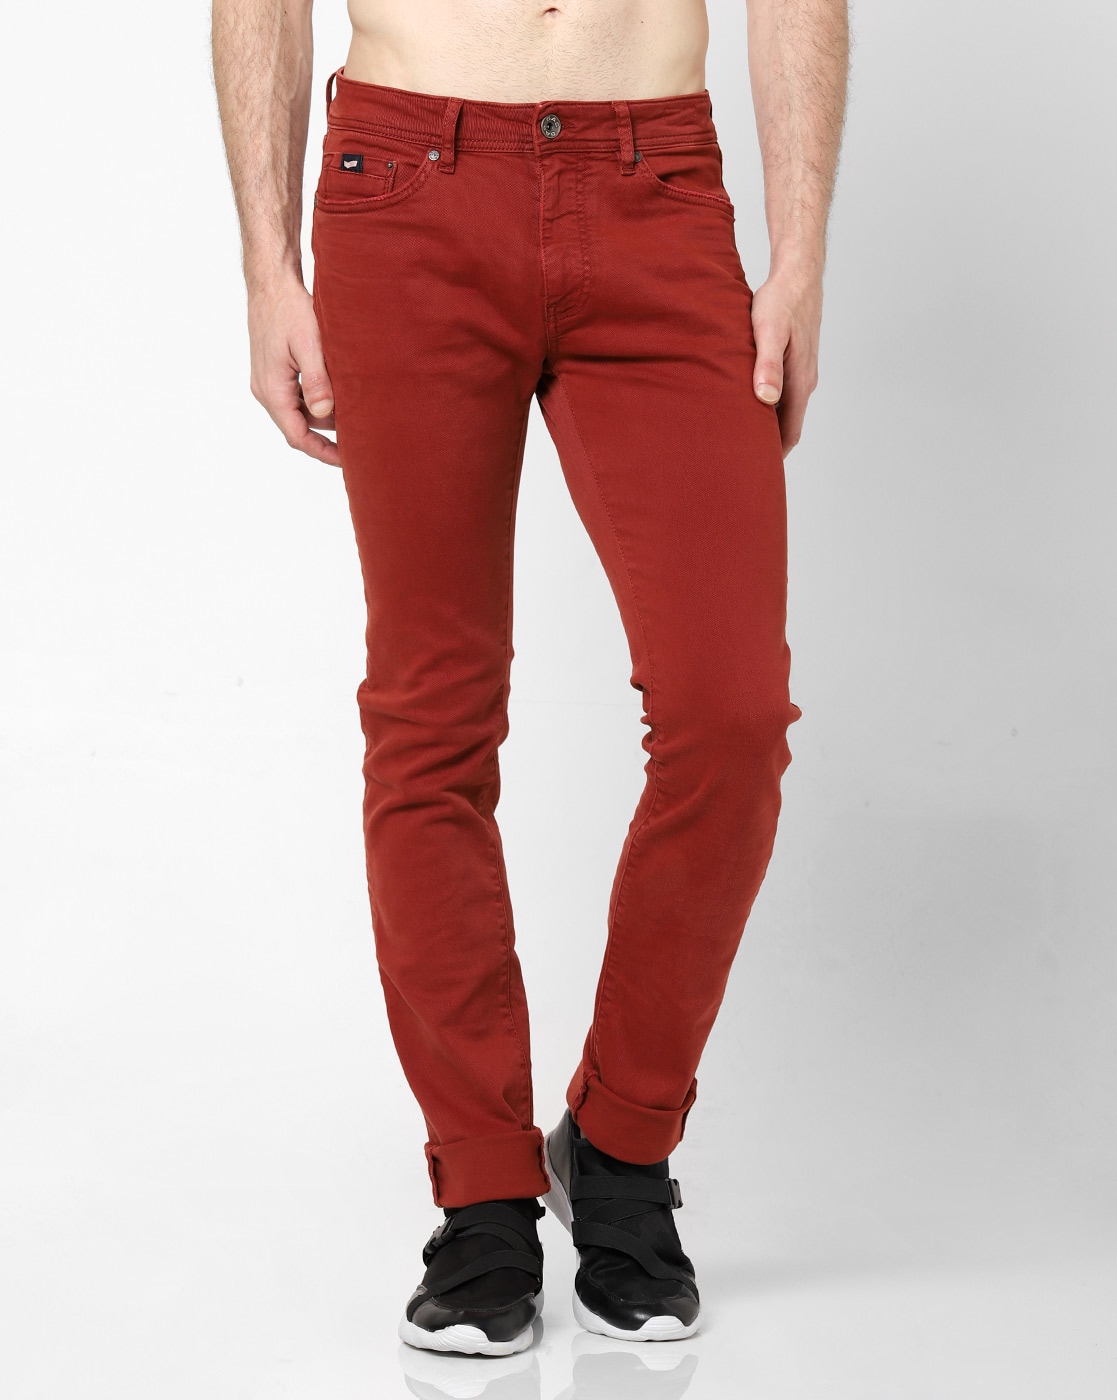 jeans maroon